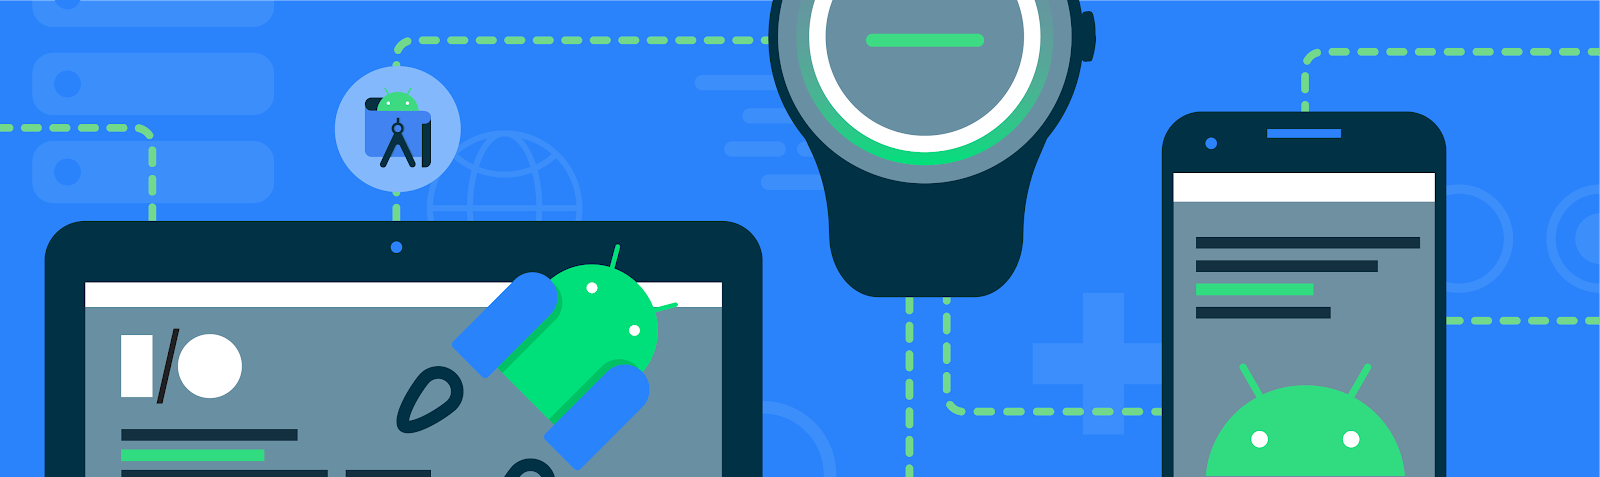 Android I/O updates: Jetpack, Wear OS, etc